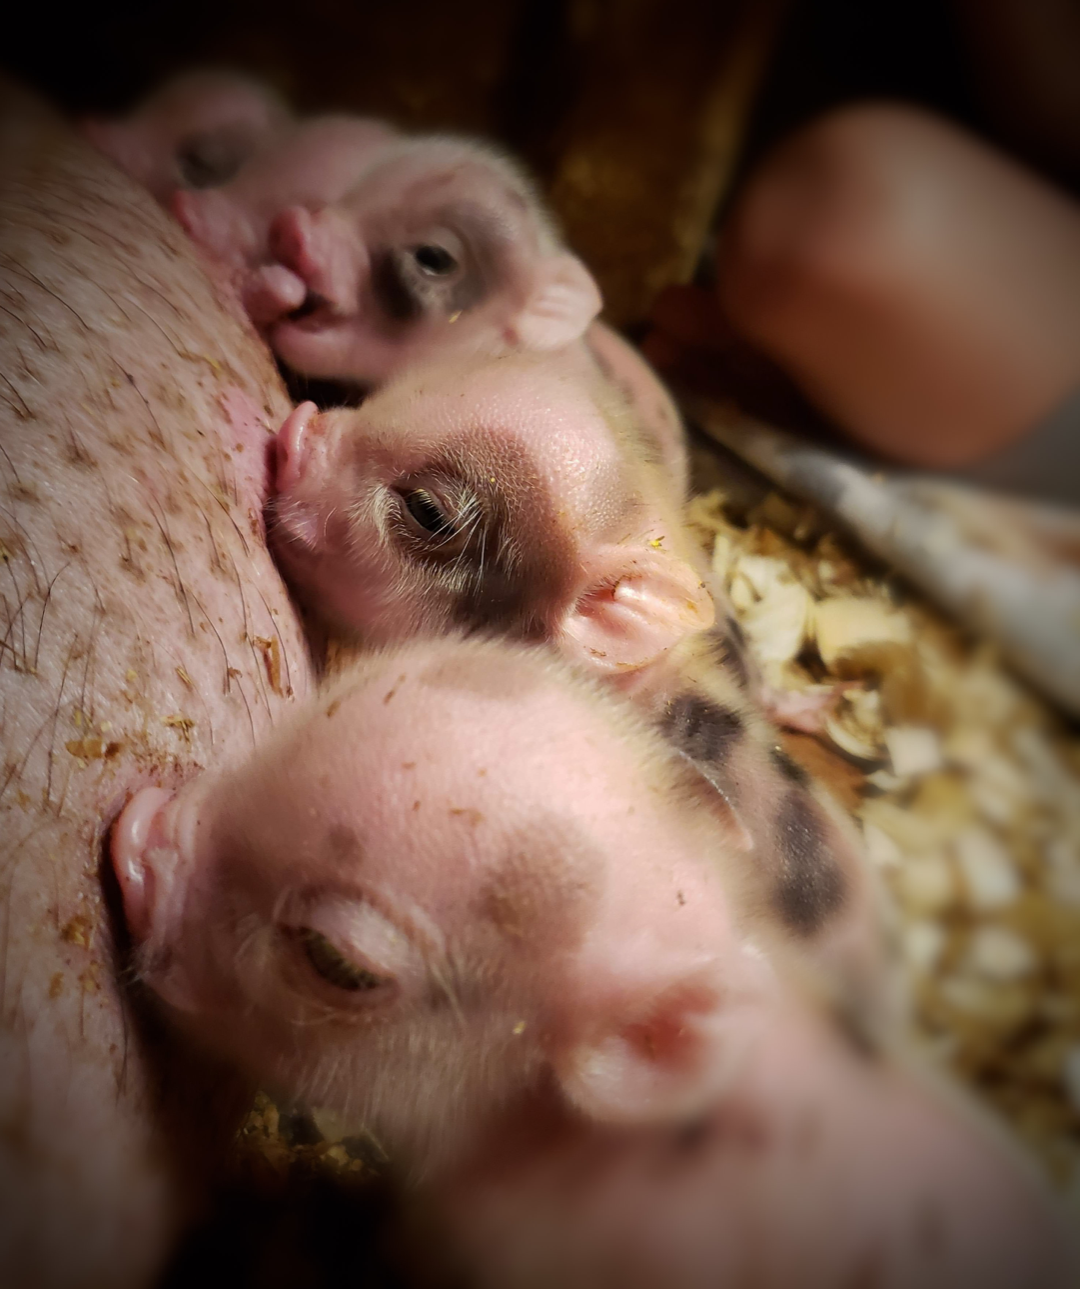 mini pig piglet nursing on mom sow